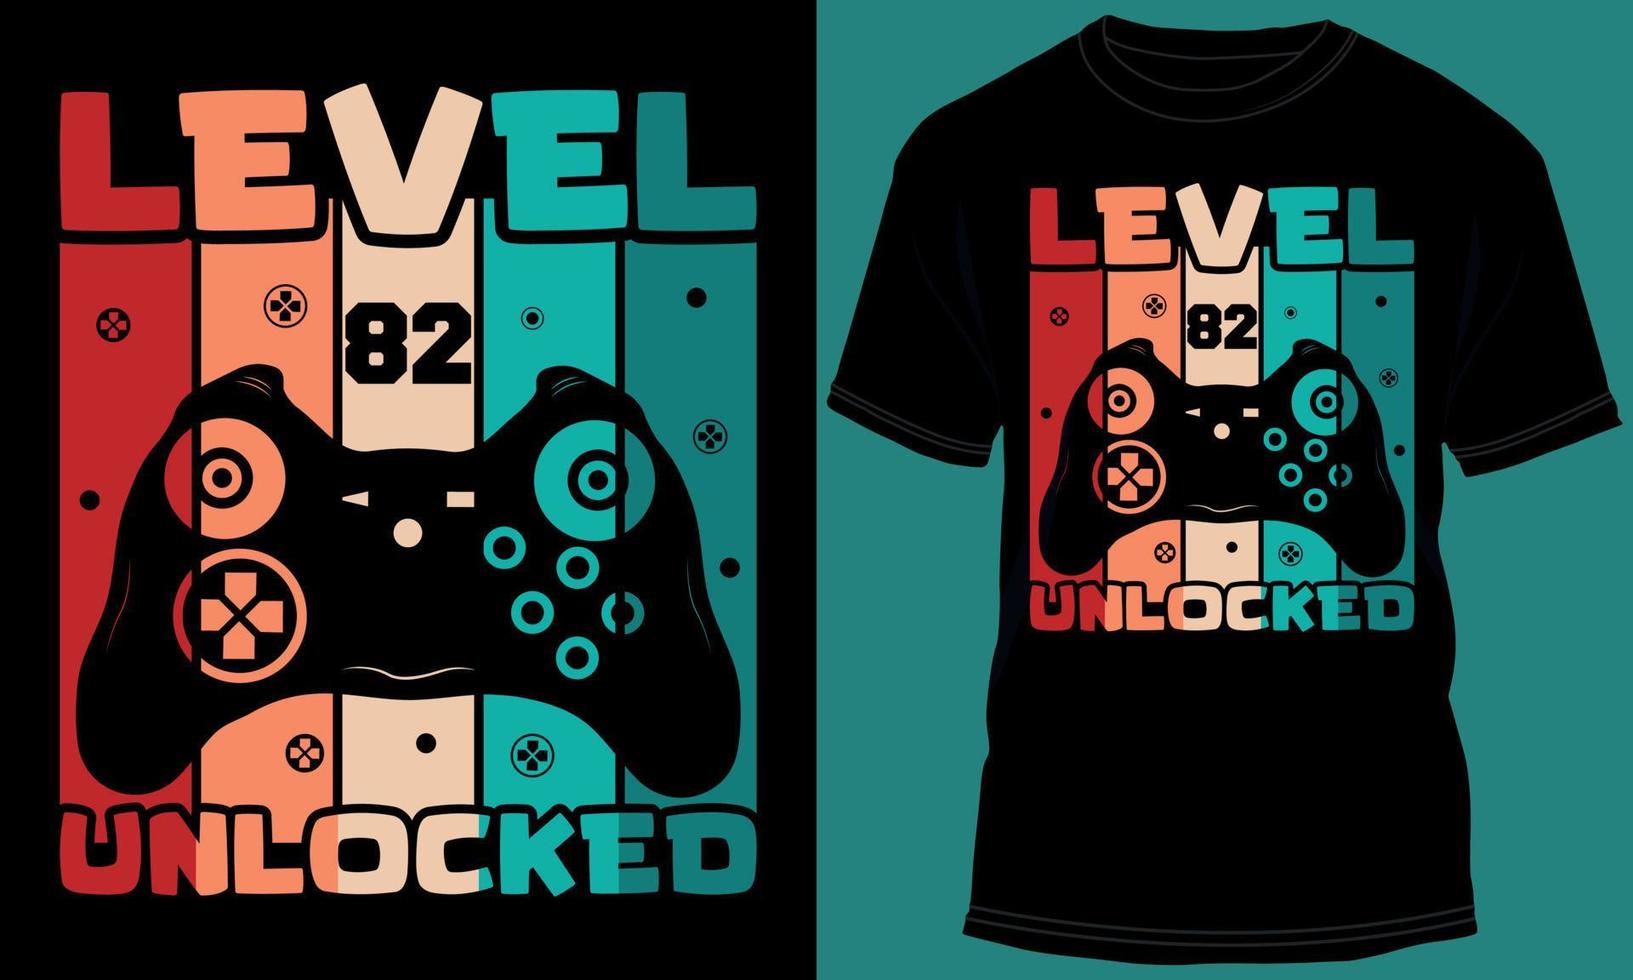 jugador o juego de azar nivel 82 desbloqueado camiseta diseño vector